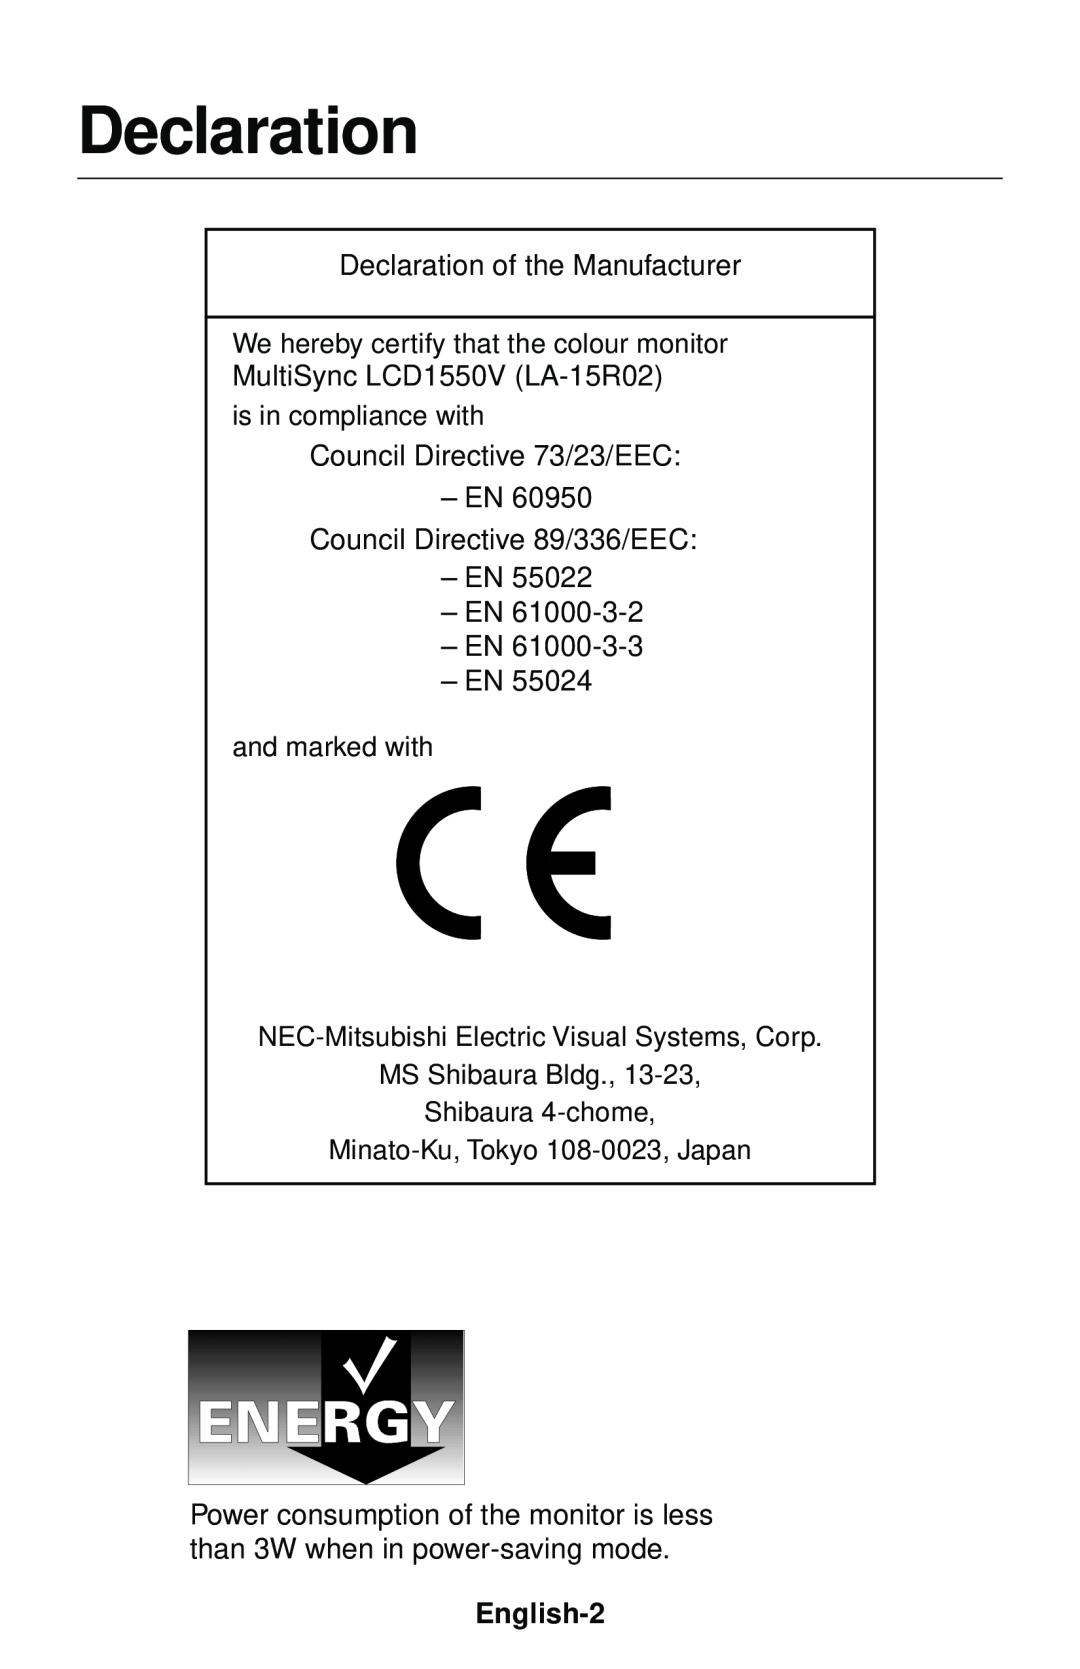 NEC LCD1550V user manual Declaration, English-2 